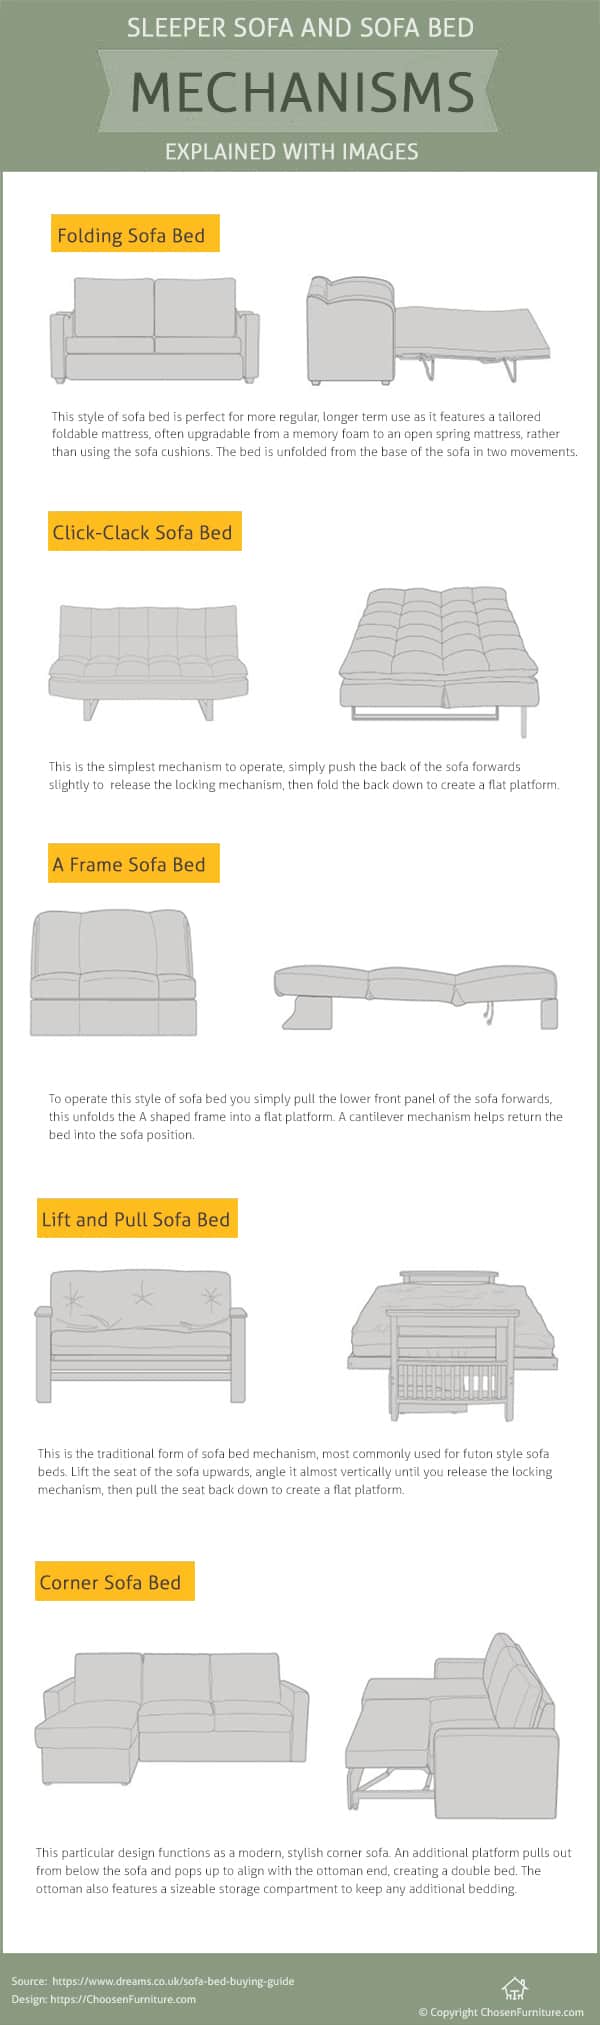 Sleeper sofa bed mechanism